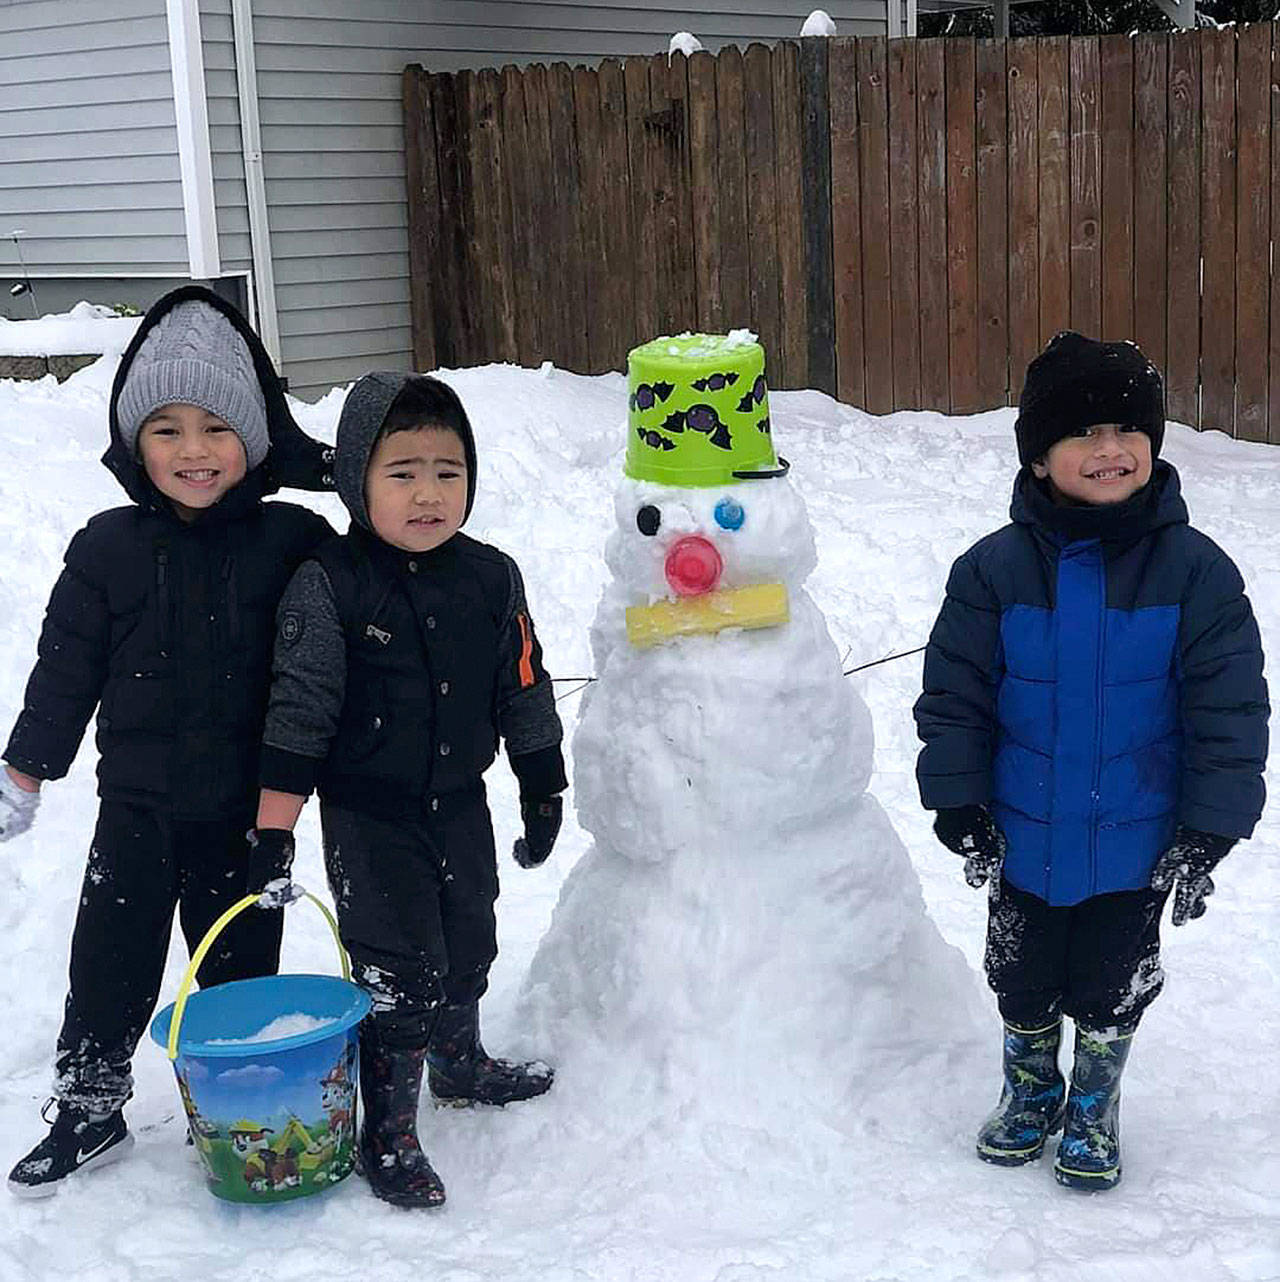 Darius, 5, Kayden, 3, and Toamalama, 3, enjoy the snow day with their snowman. Photo courtesy of Frances S. Papatu